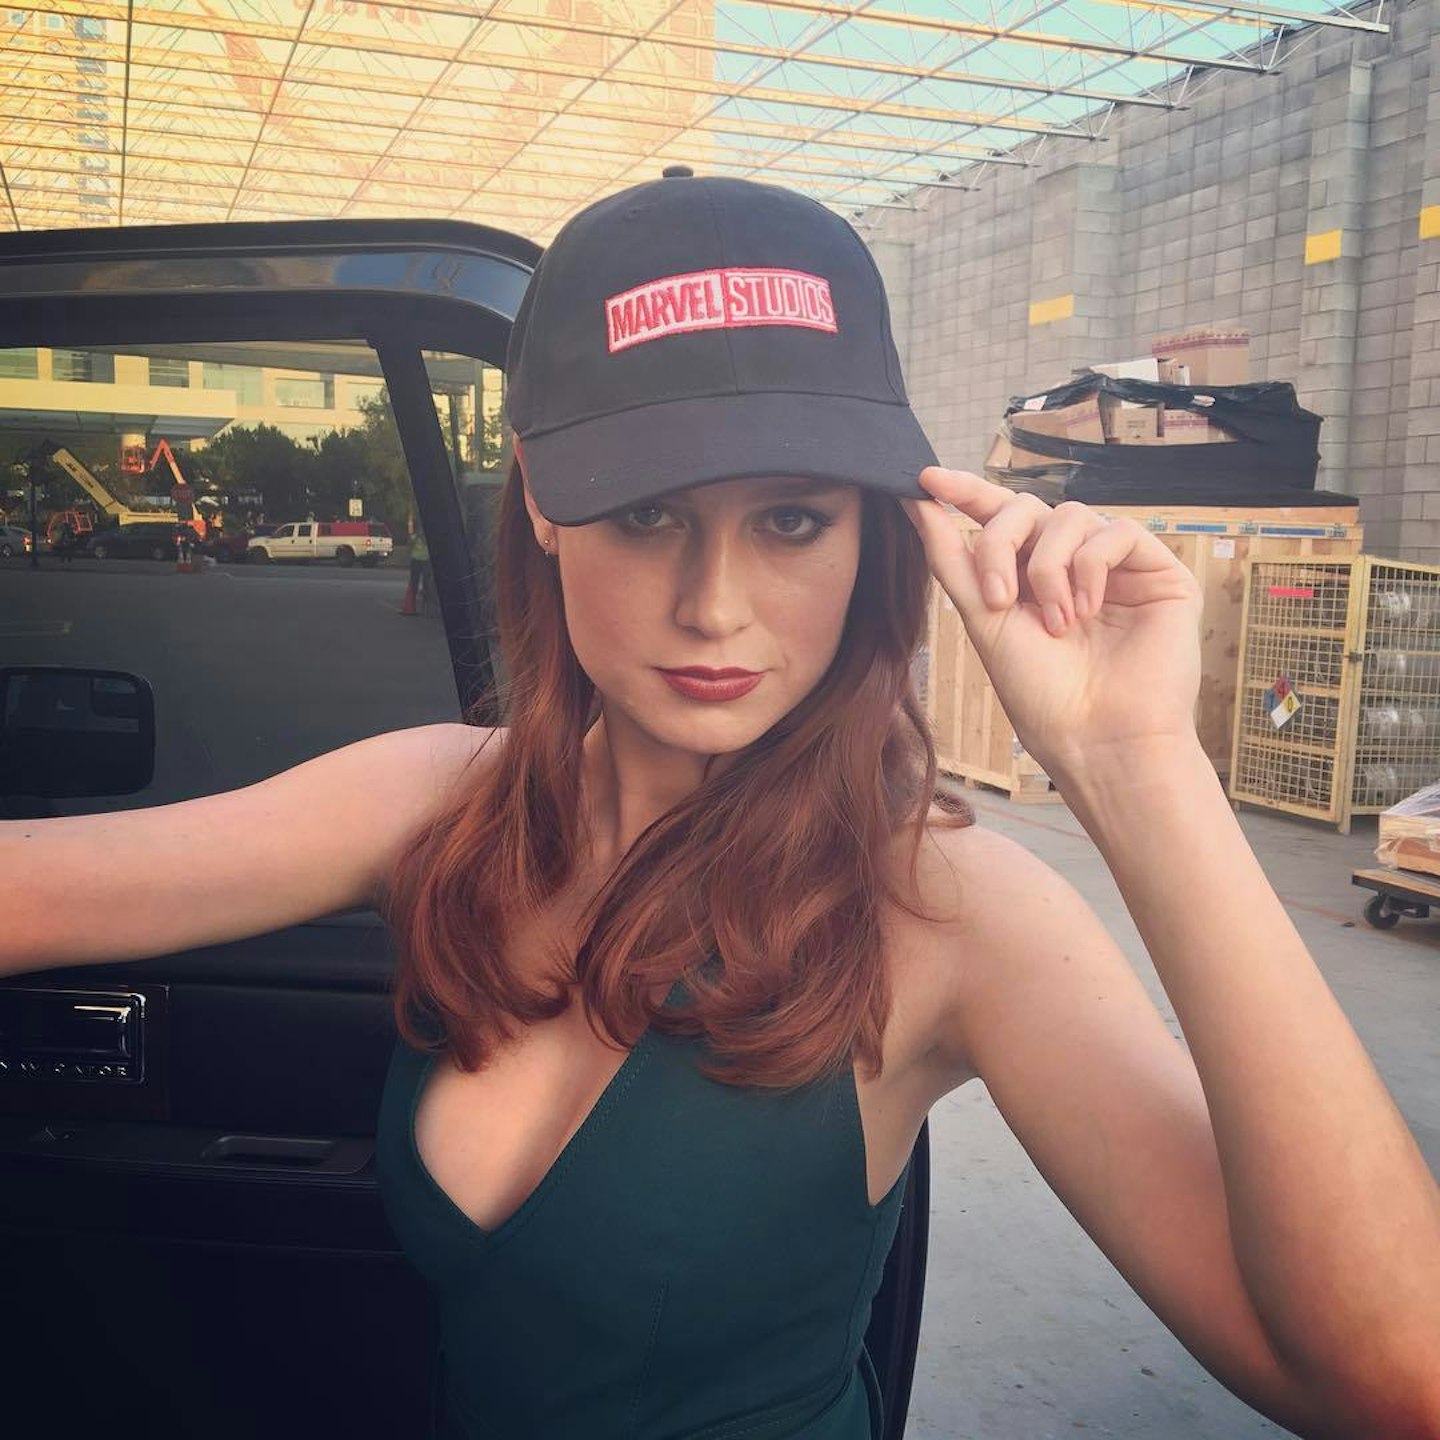 Brie Larson Instagram image Captain Marvel announcement